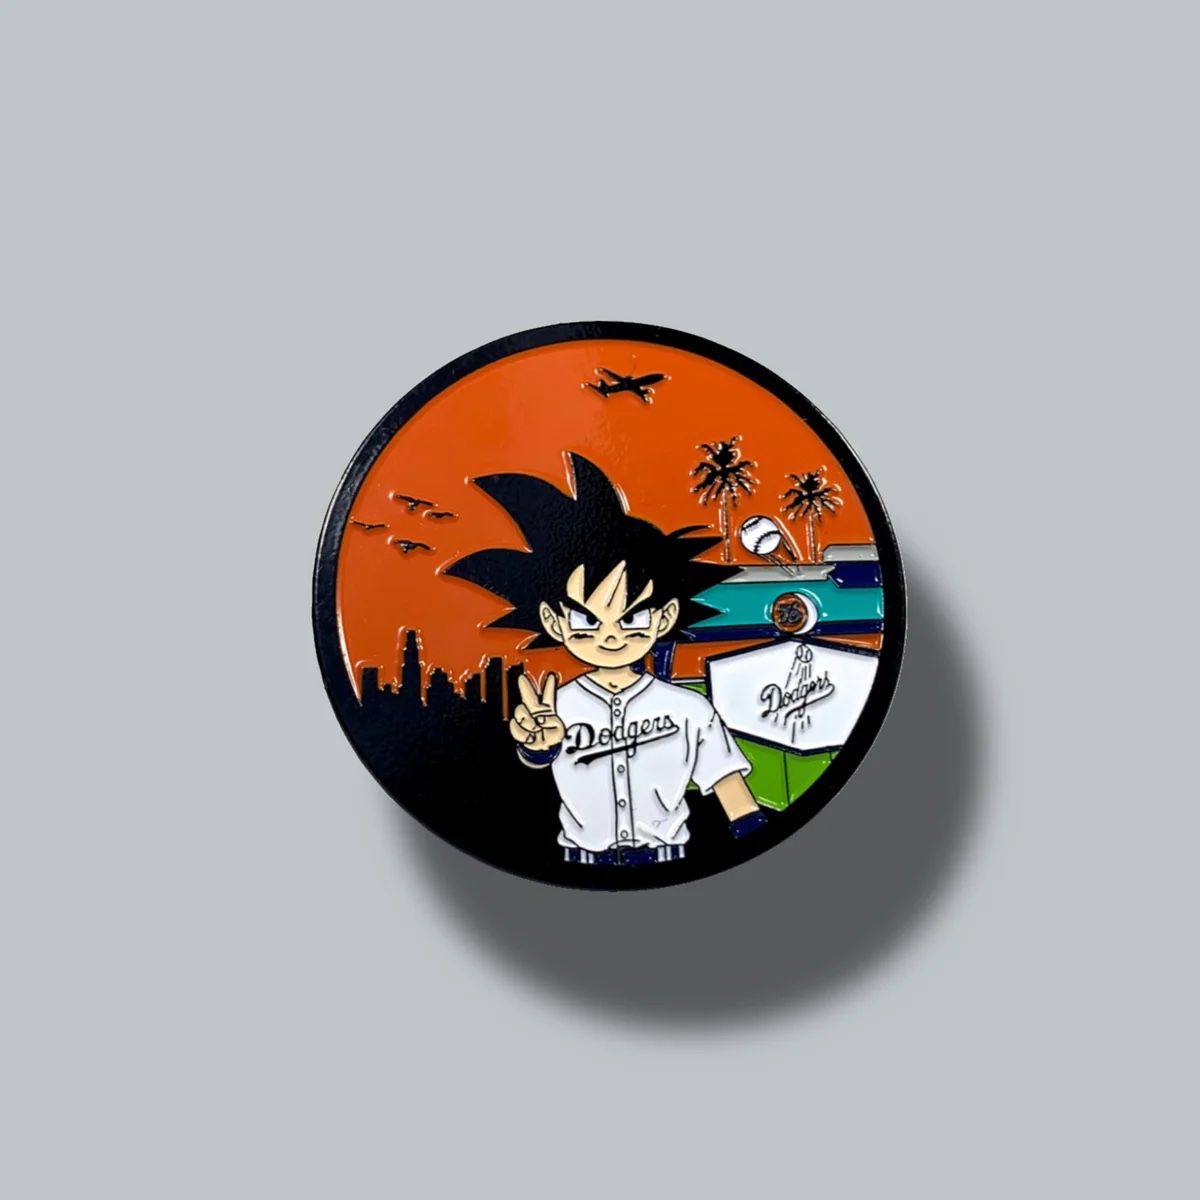 Dragonball Z Goku Dodgers pin